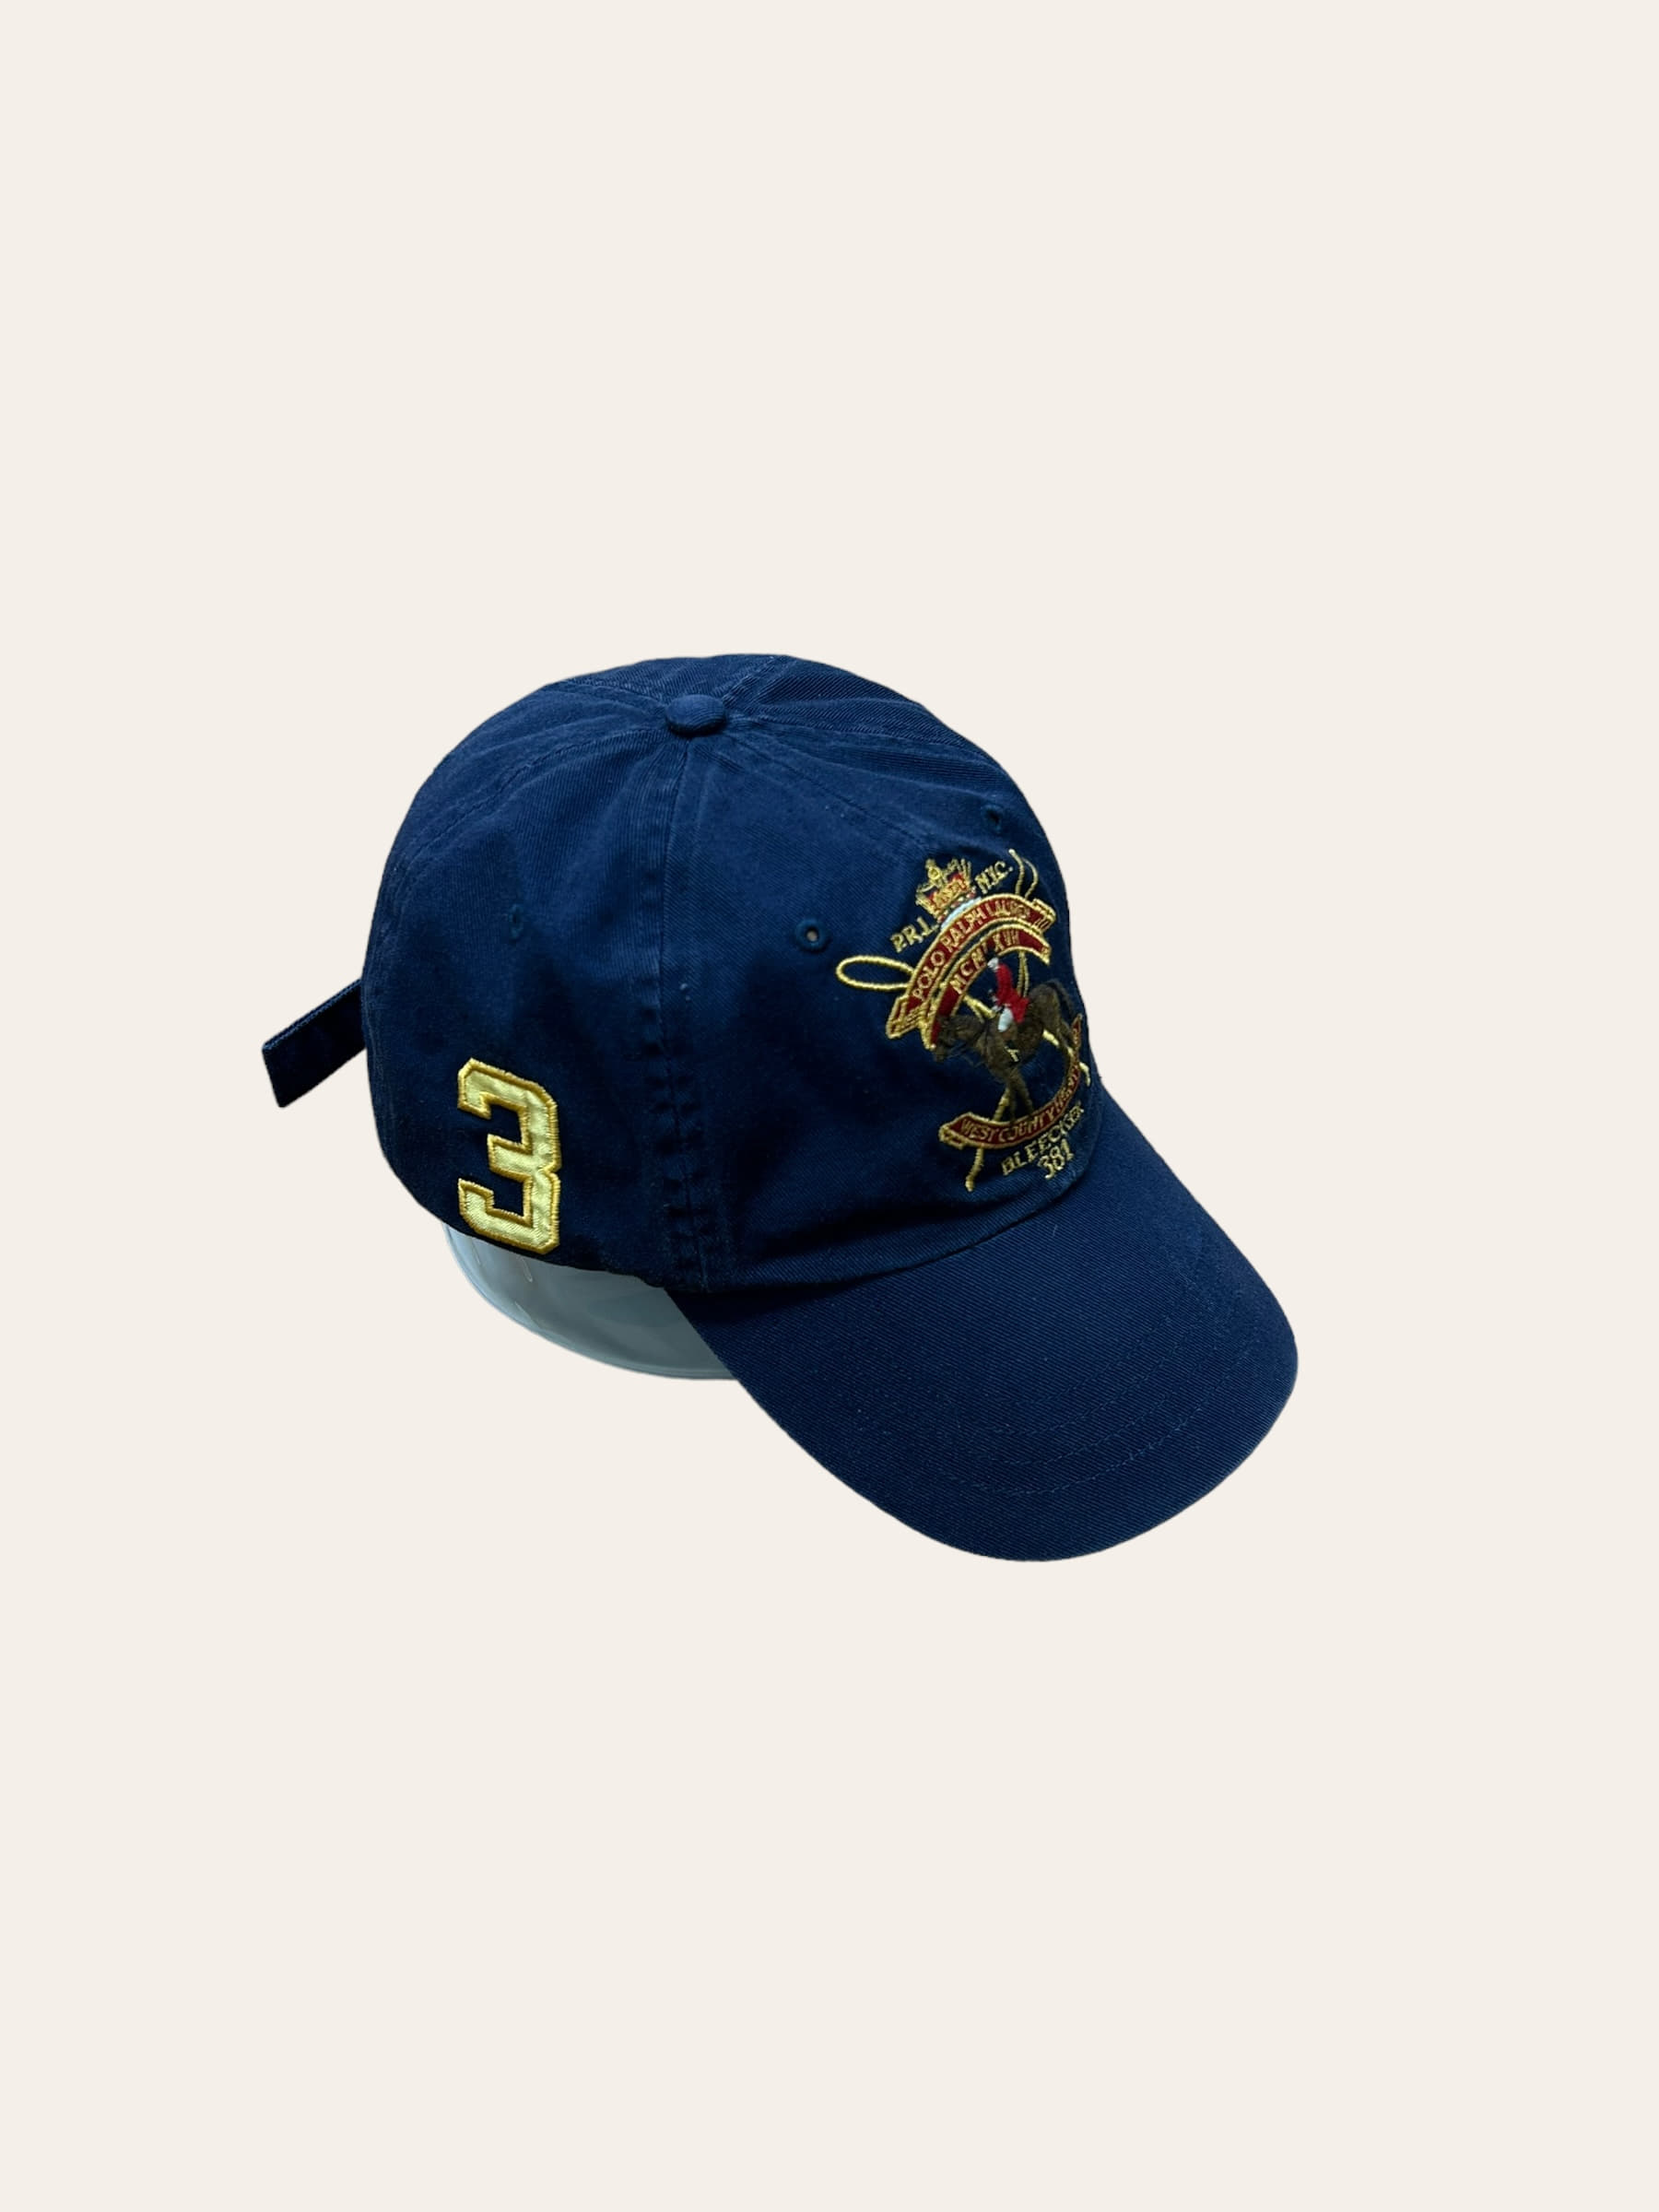 Polo ralph lauren navy embroidered cap